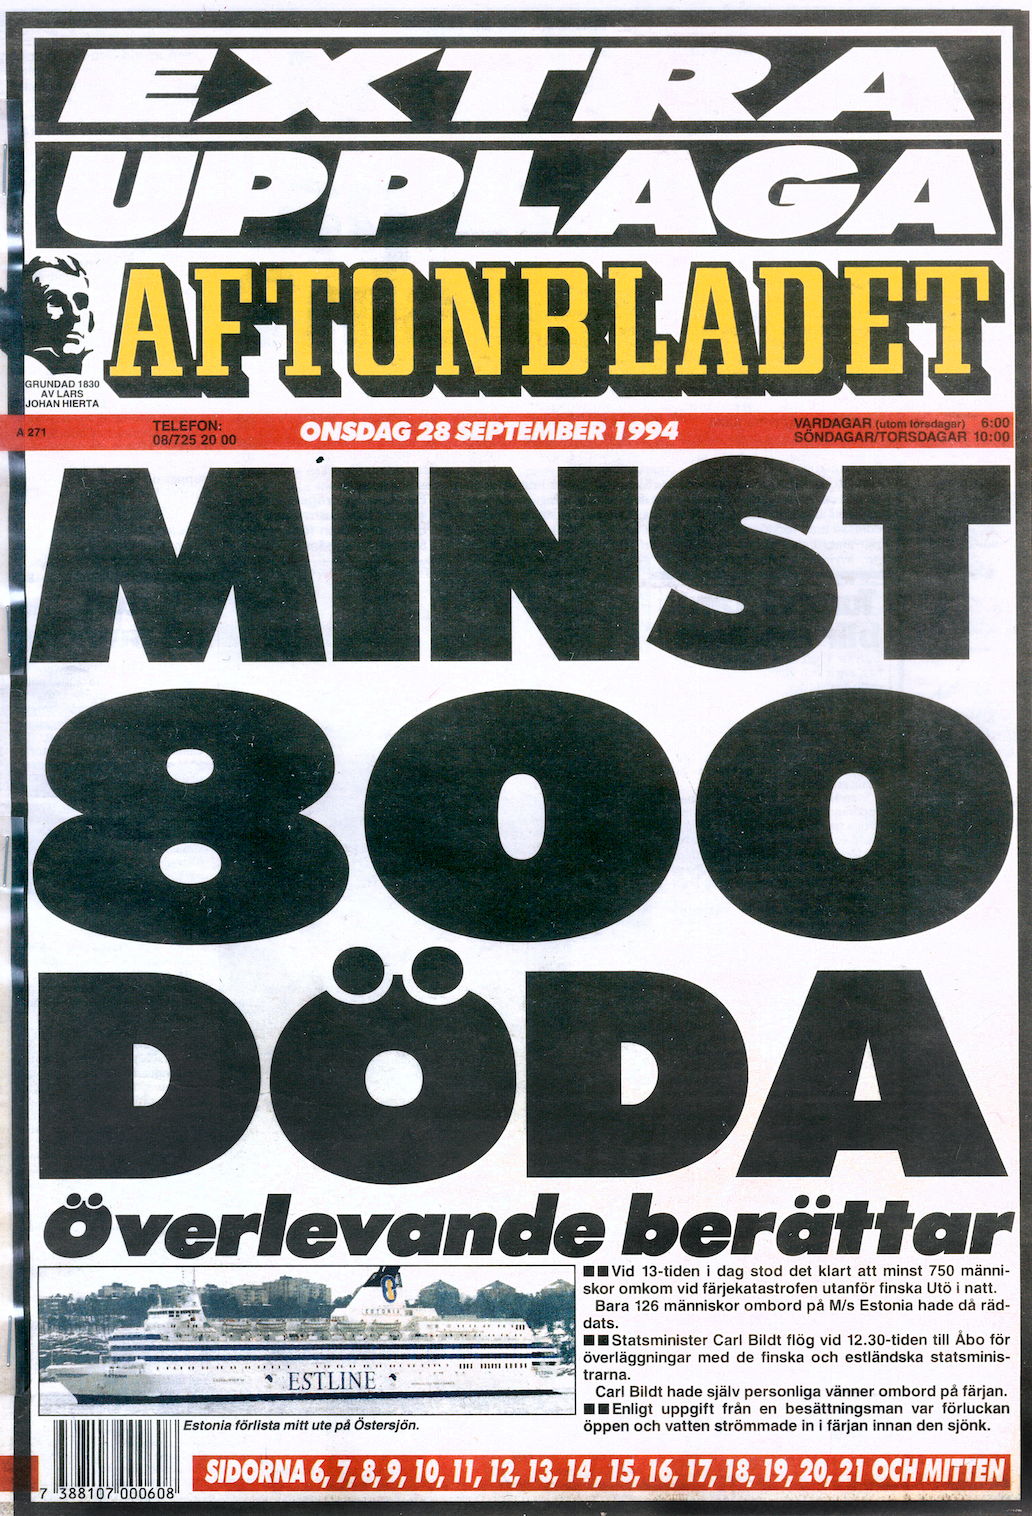 Aftonbladets extraupplaga efter katastrofen.